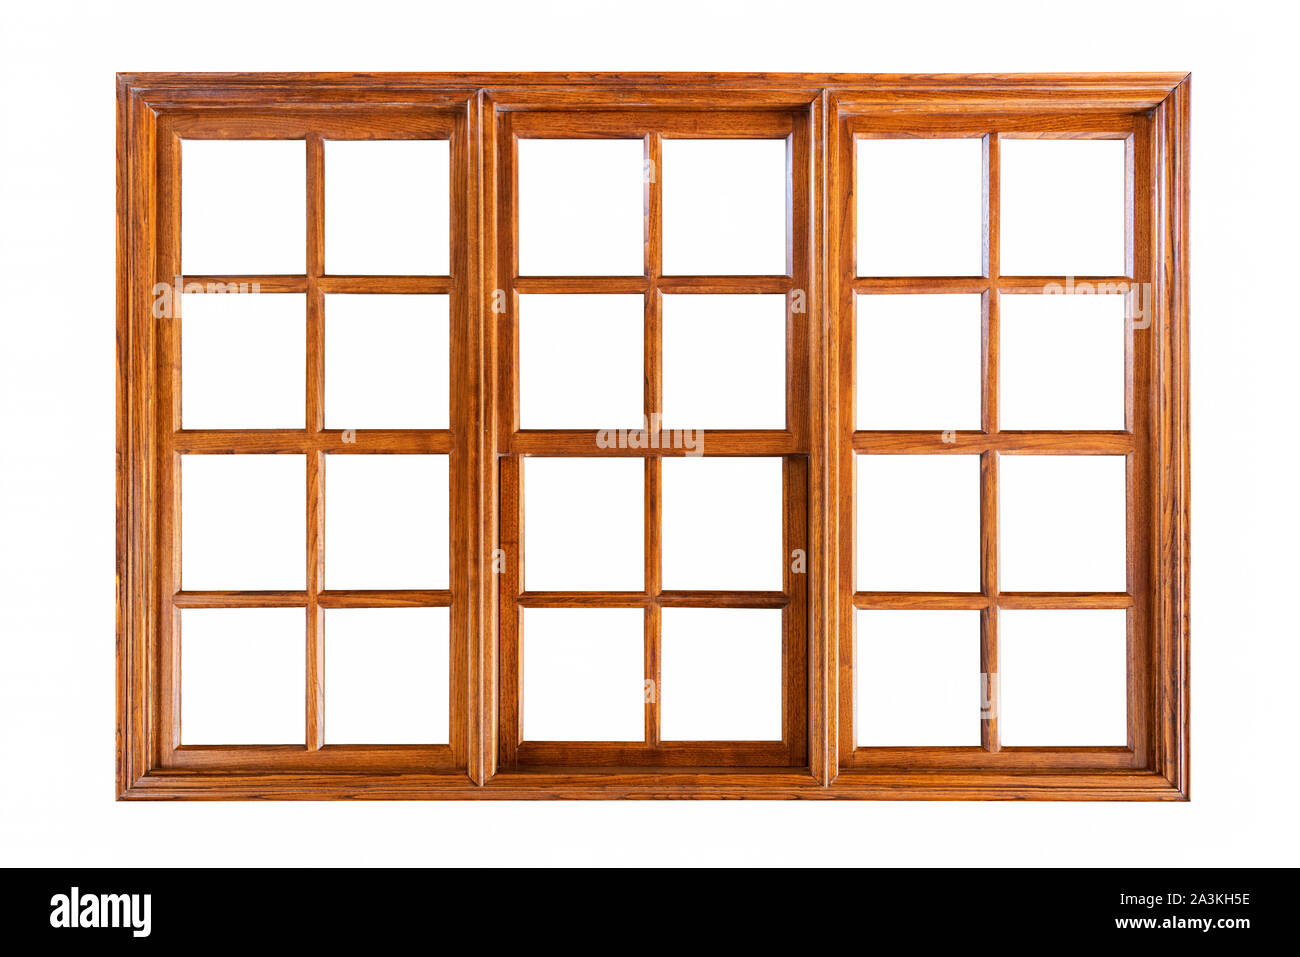 Big wooden window isolated on white background Stock Photo